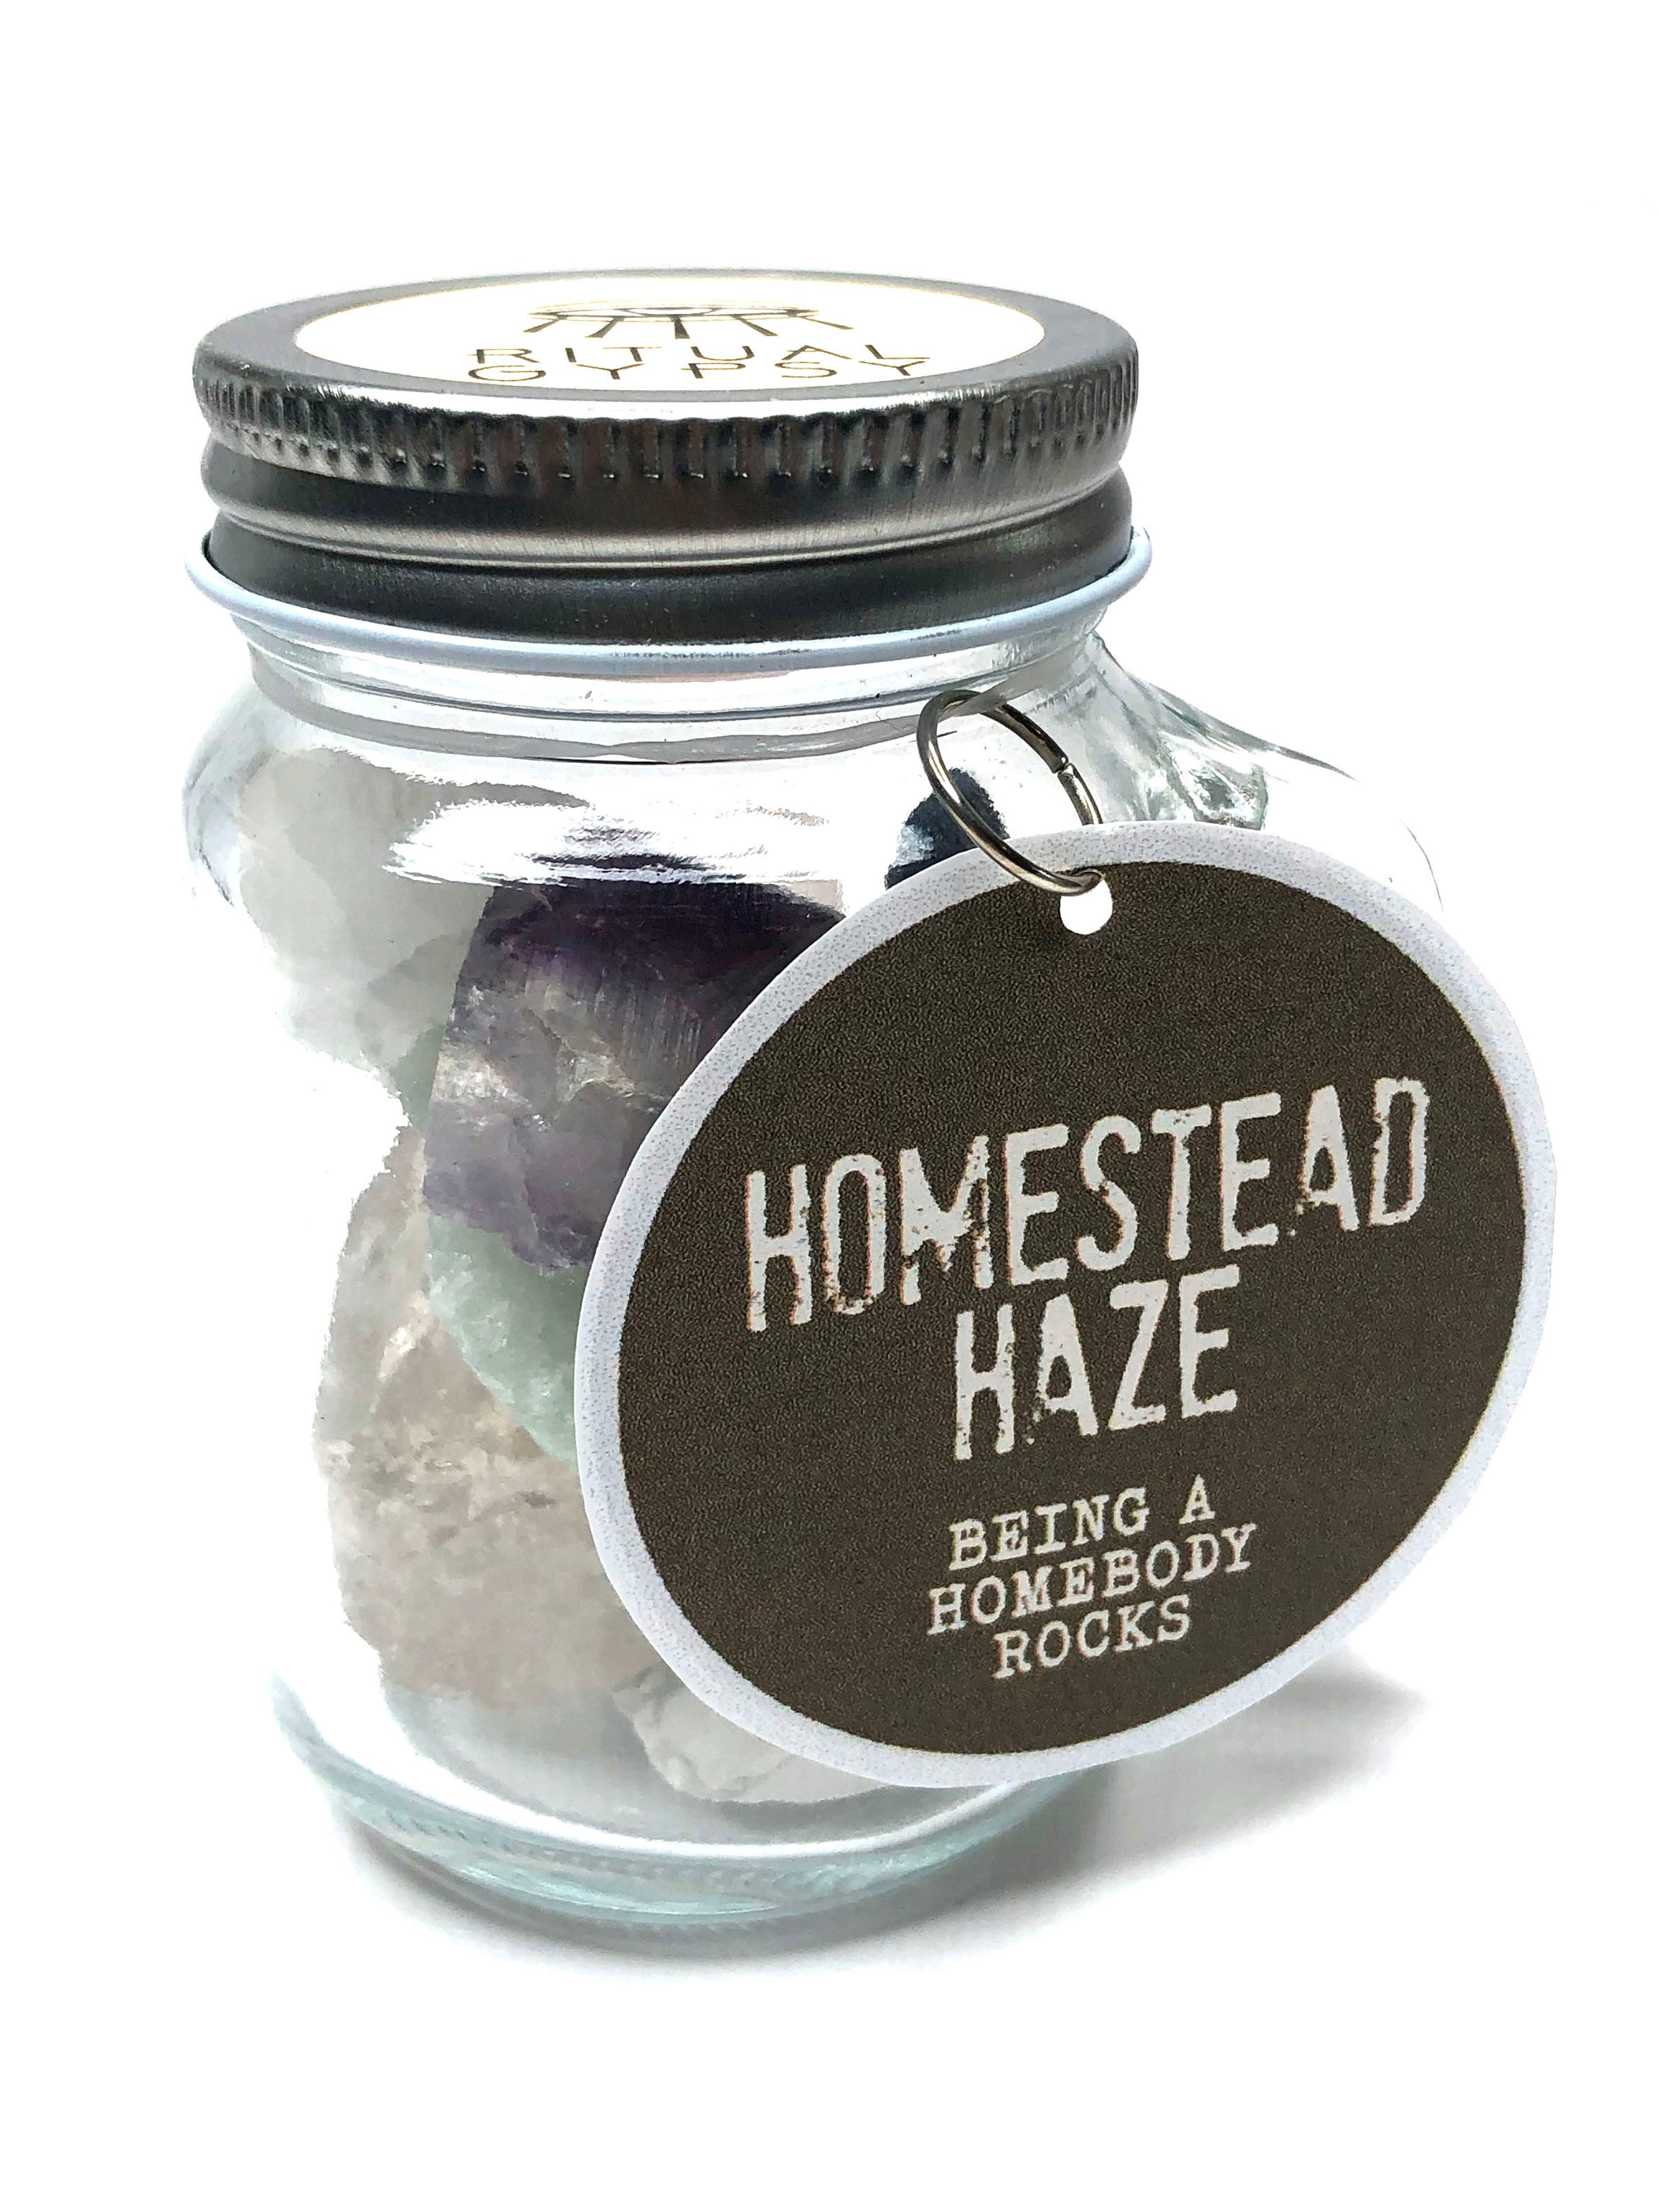 'HOMESTEAD HAZE' - Being A Homebody Rocks